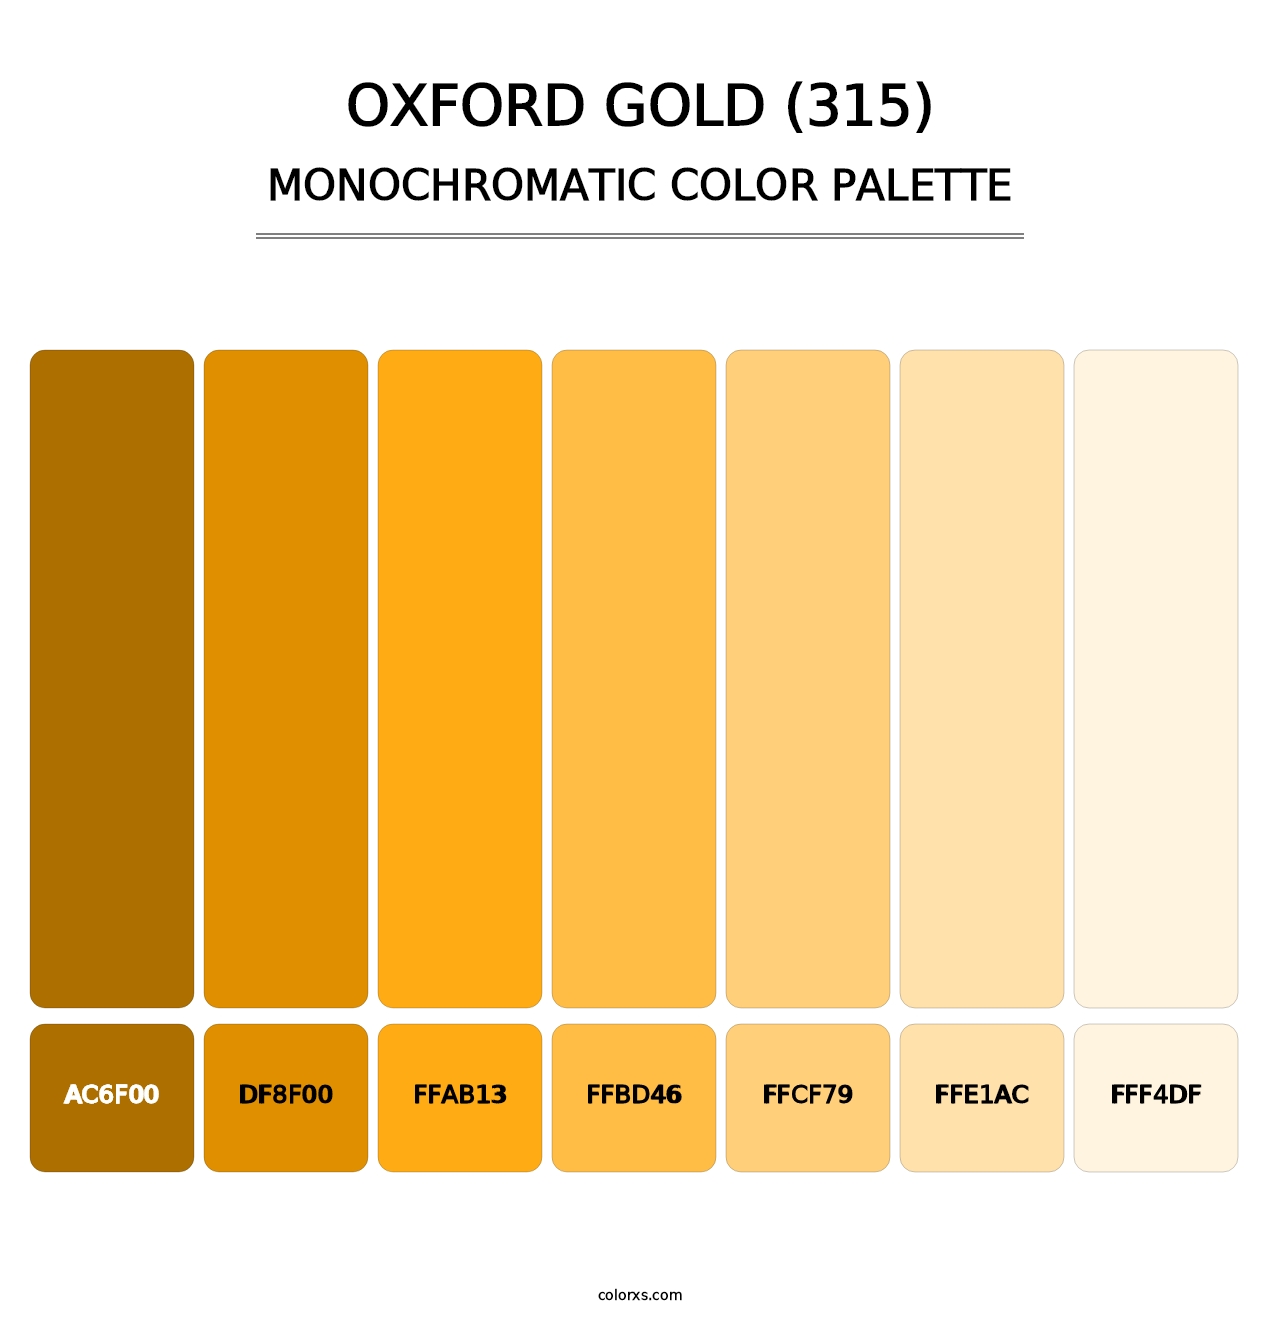 Oxford Gold (315) - Monochromatic Color Palette